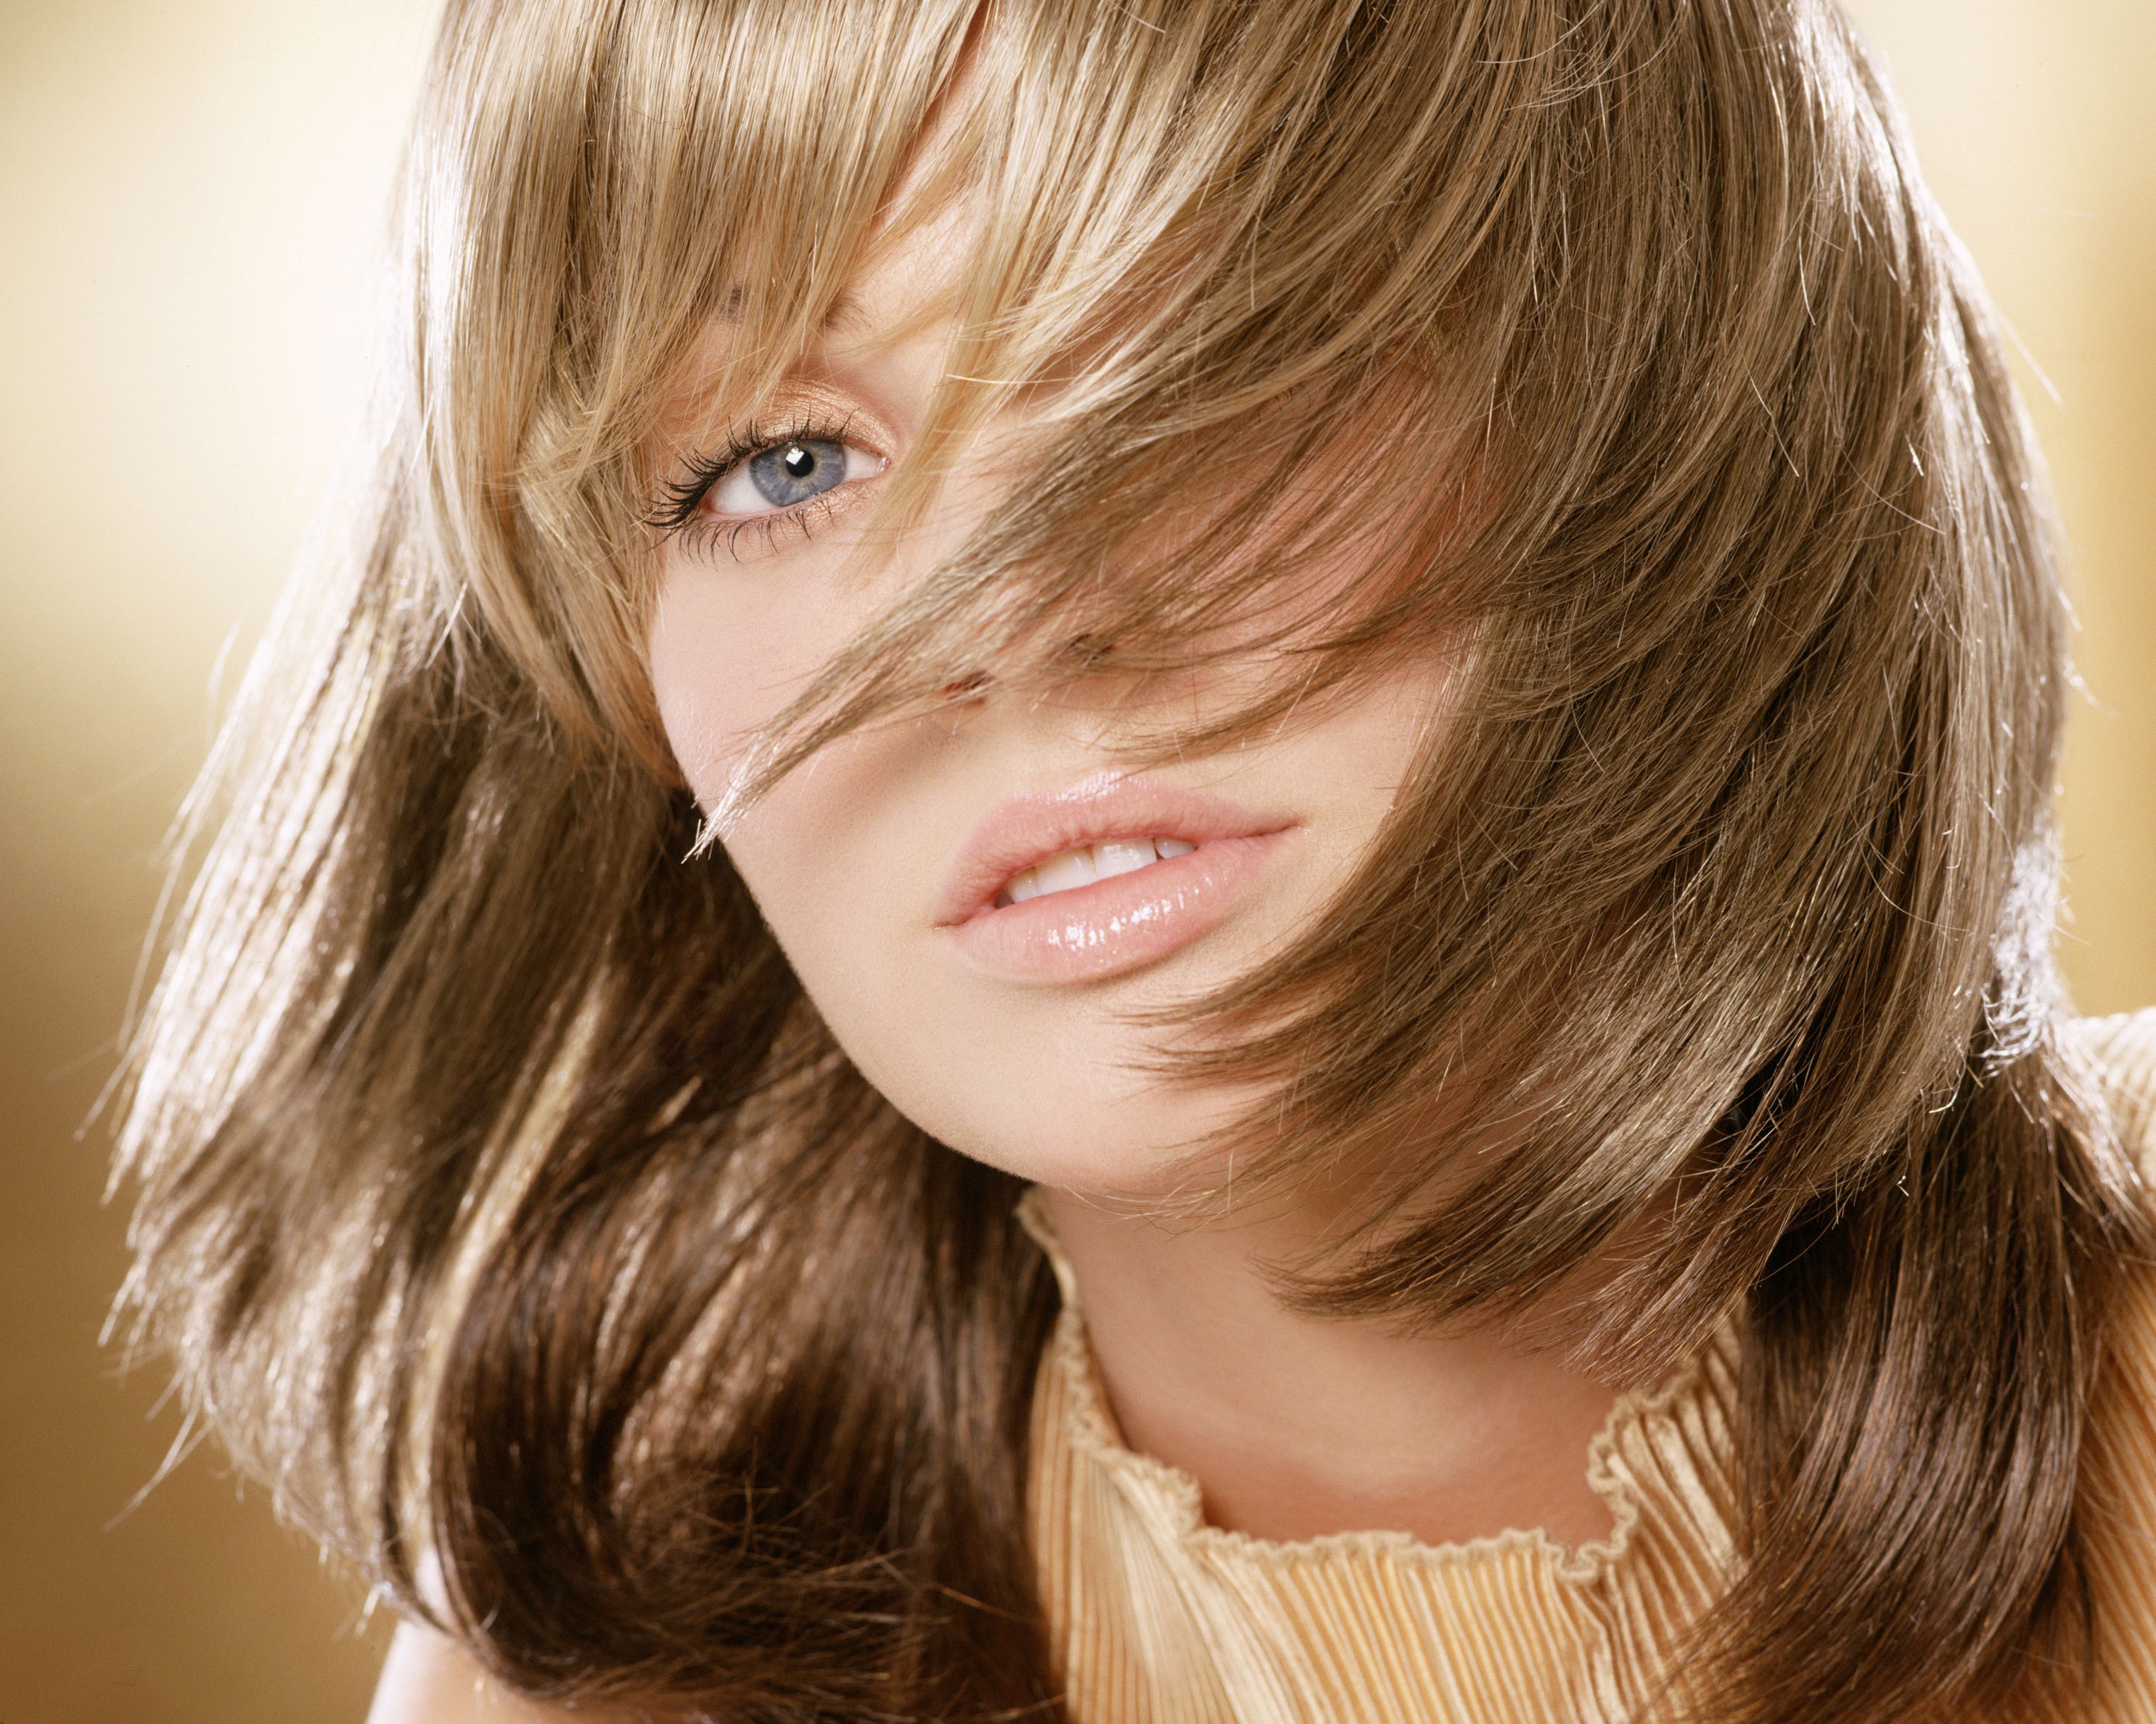 blondes, women, April Bowlby, hair in face - desktop wallpaper